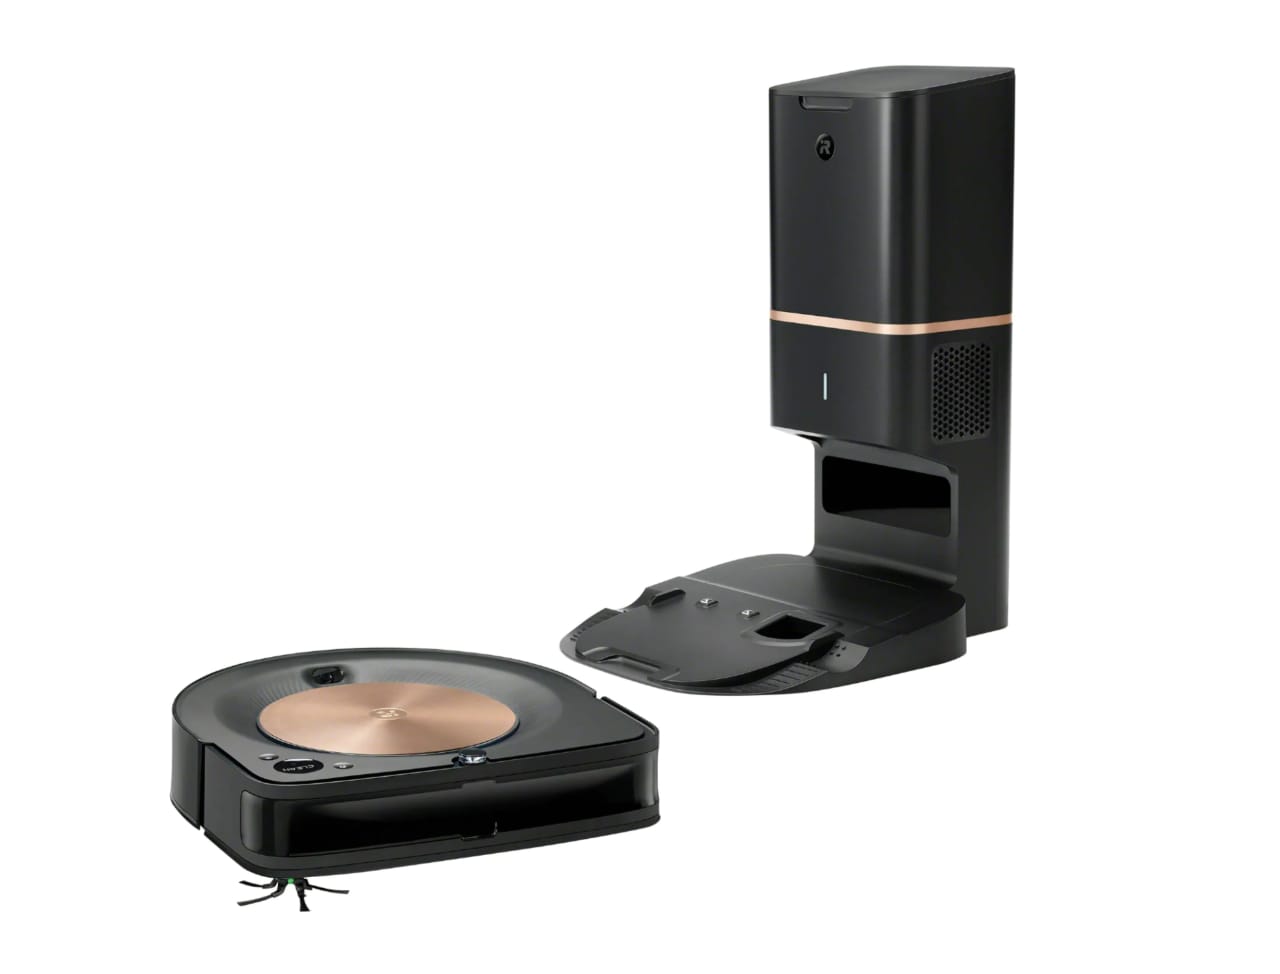 iRobot Roomba j7+ vs s9+ (High End Robot Vacuums Comparison)